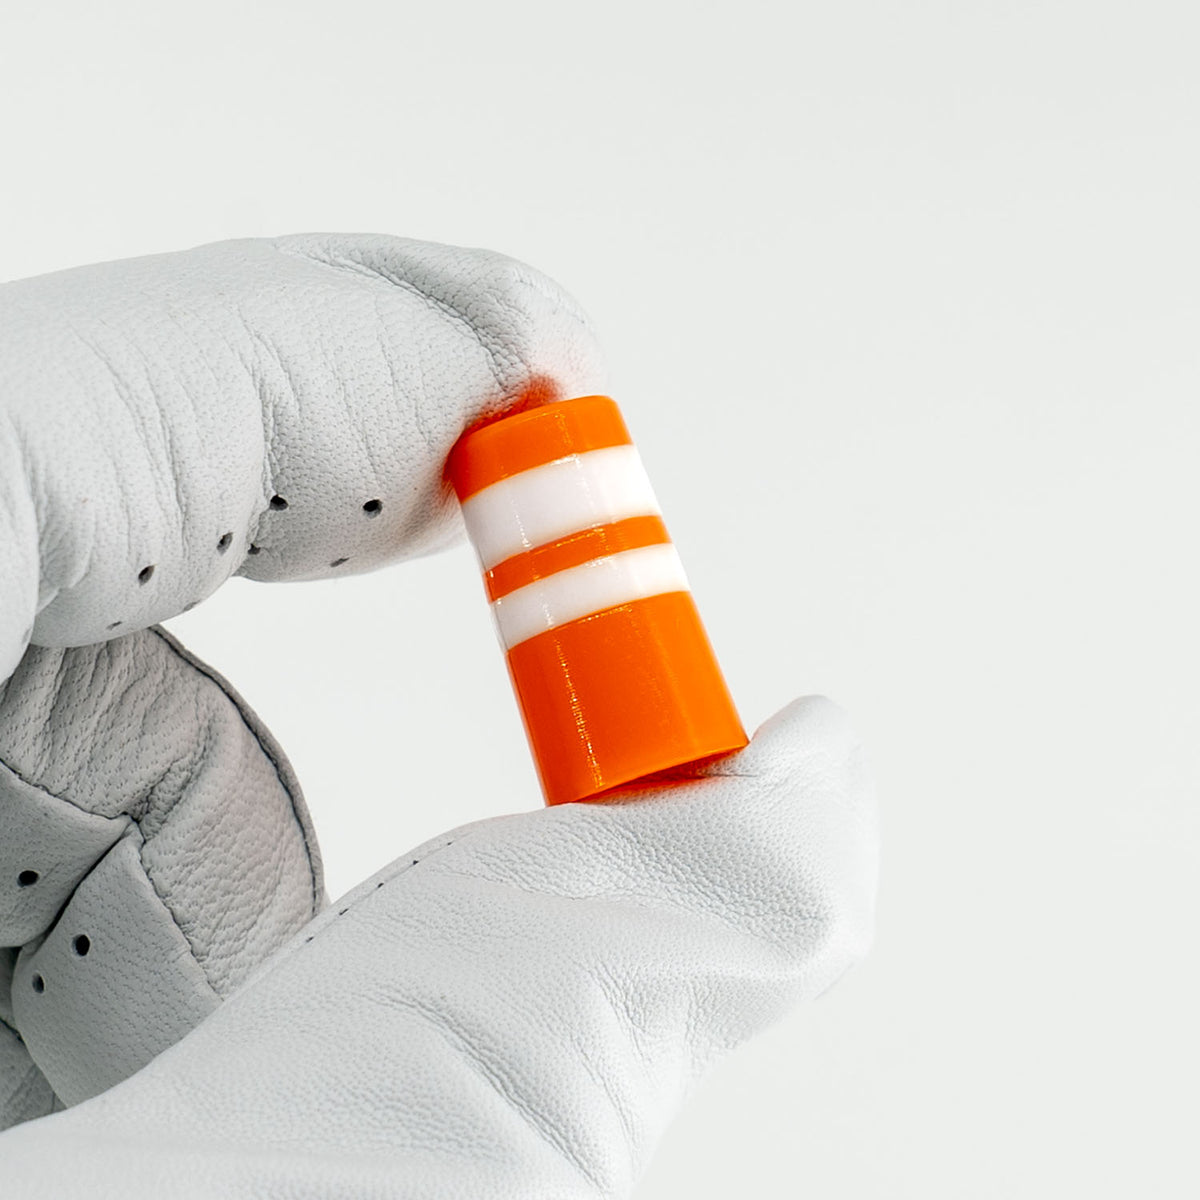 traffic cone orange and white golf club ferrules single white golf glove